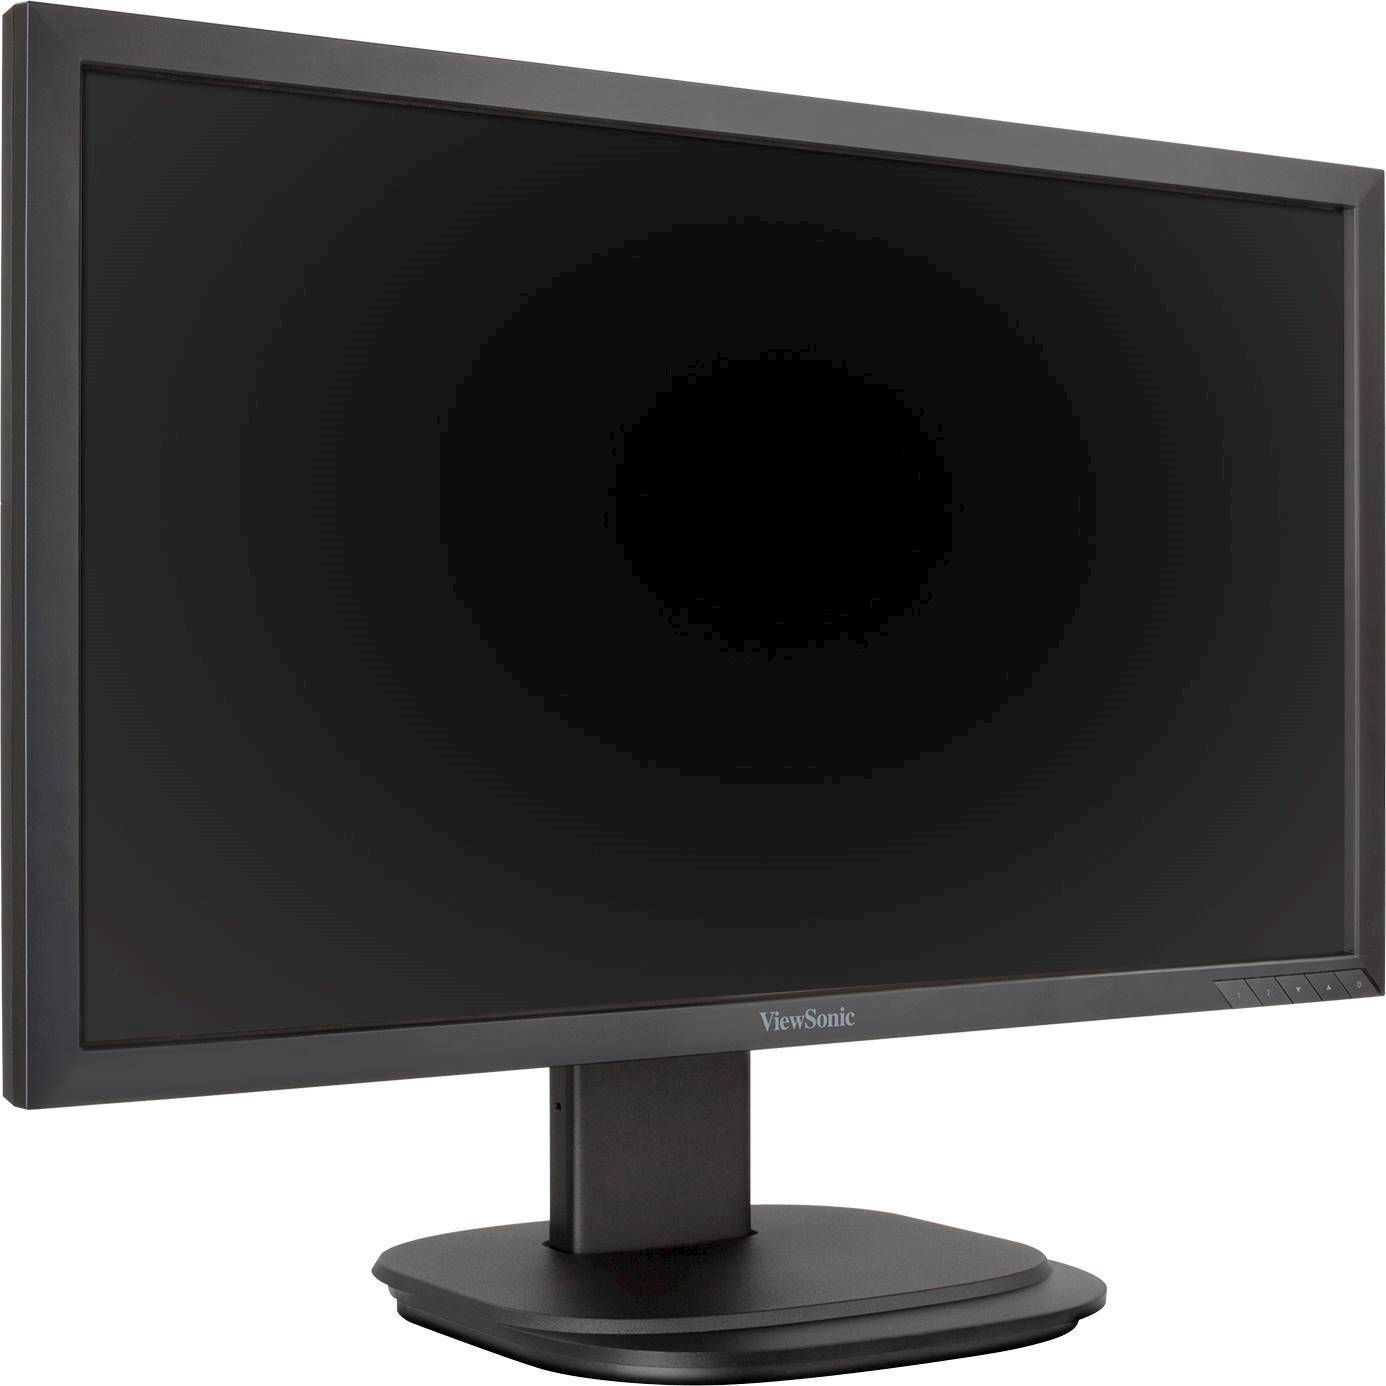 Angle View: ViewSonic - 21.5" LED HD Monitor (DVI, DisplayPort, HDMI, VGA) - Black